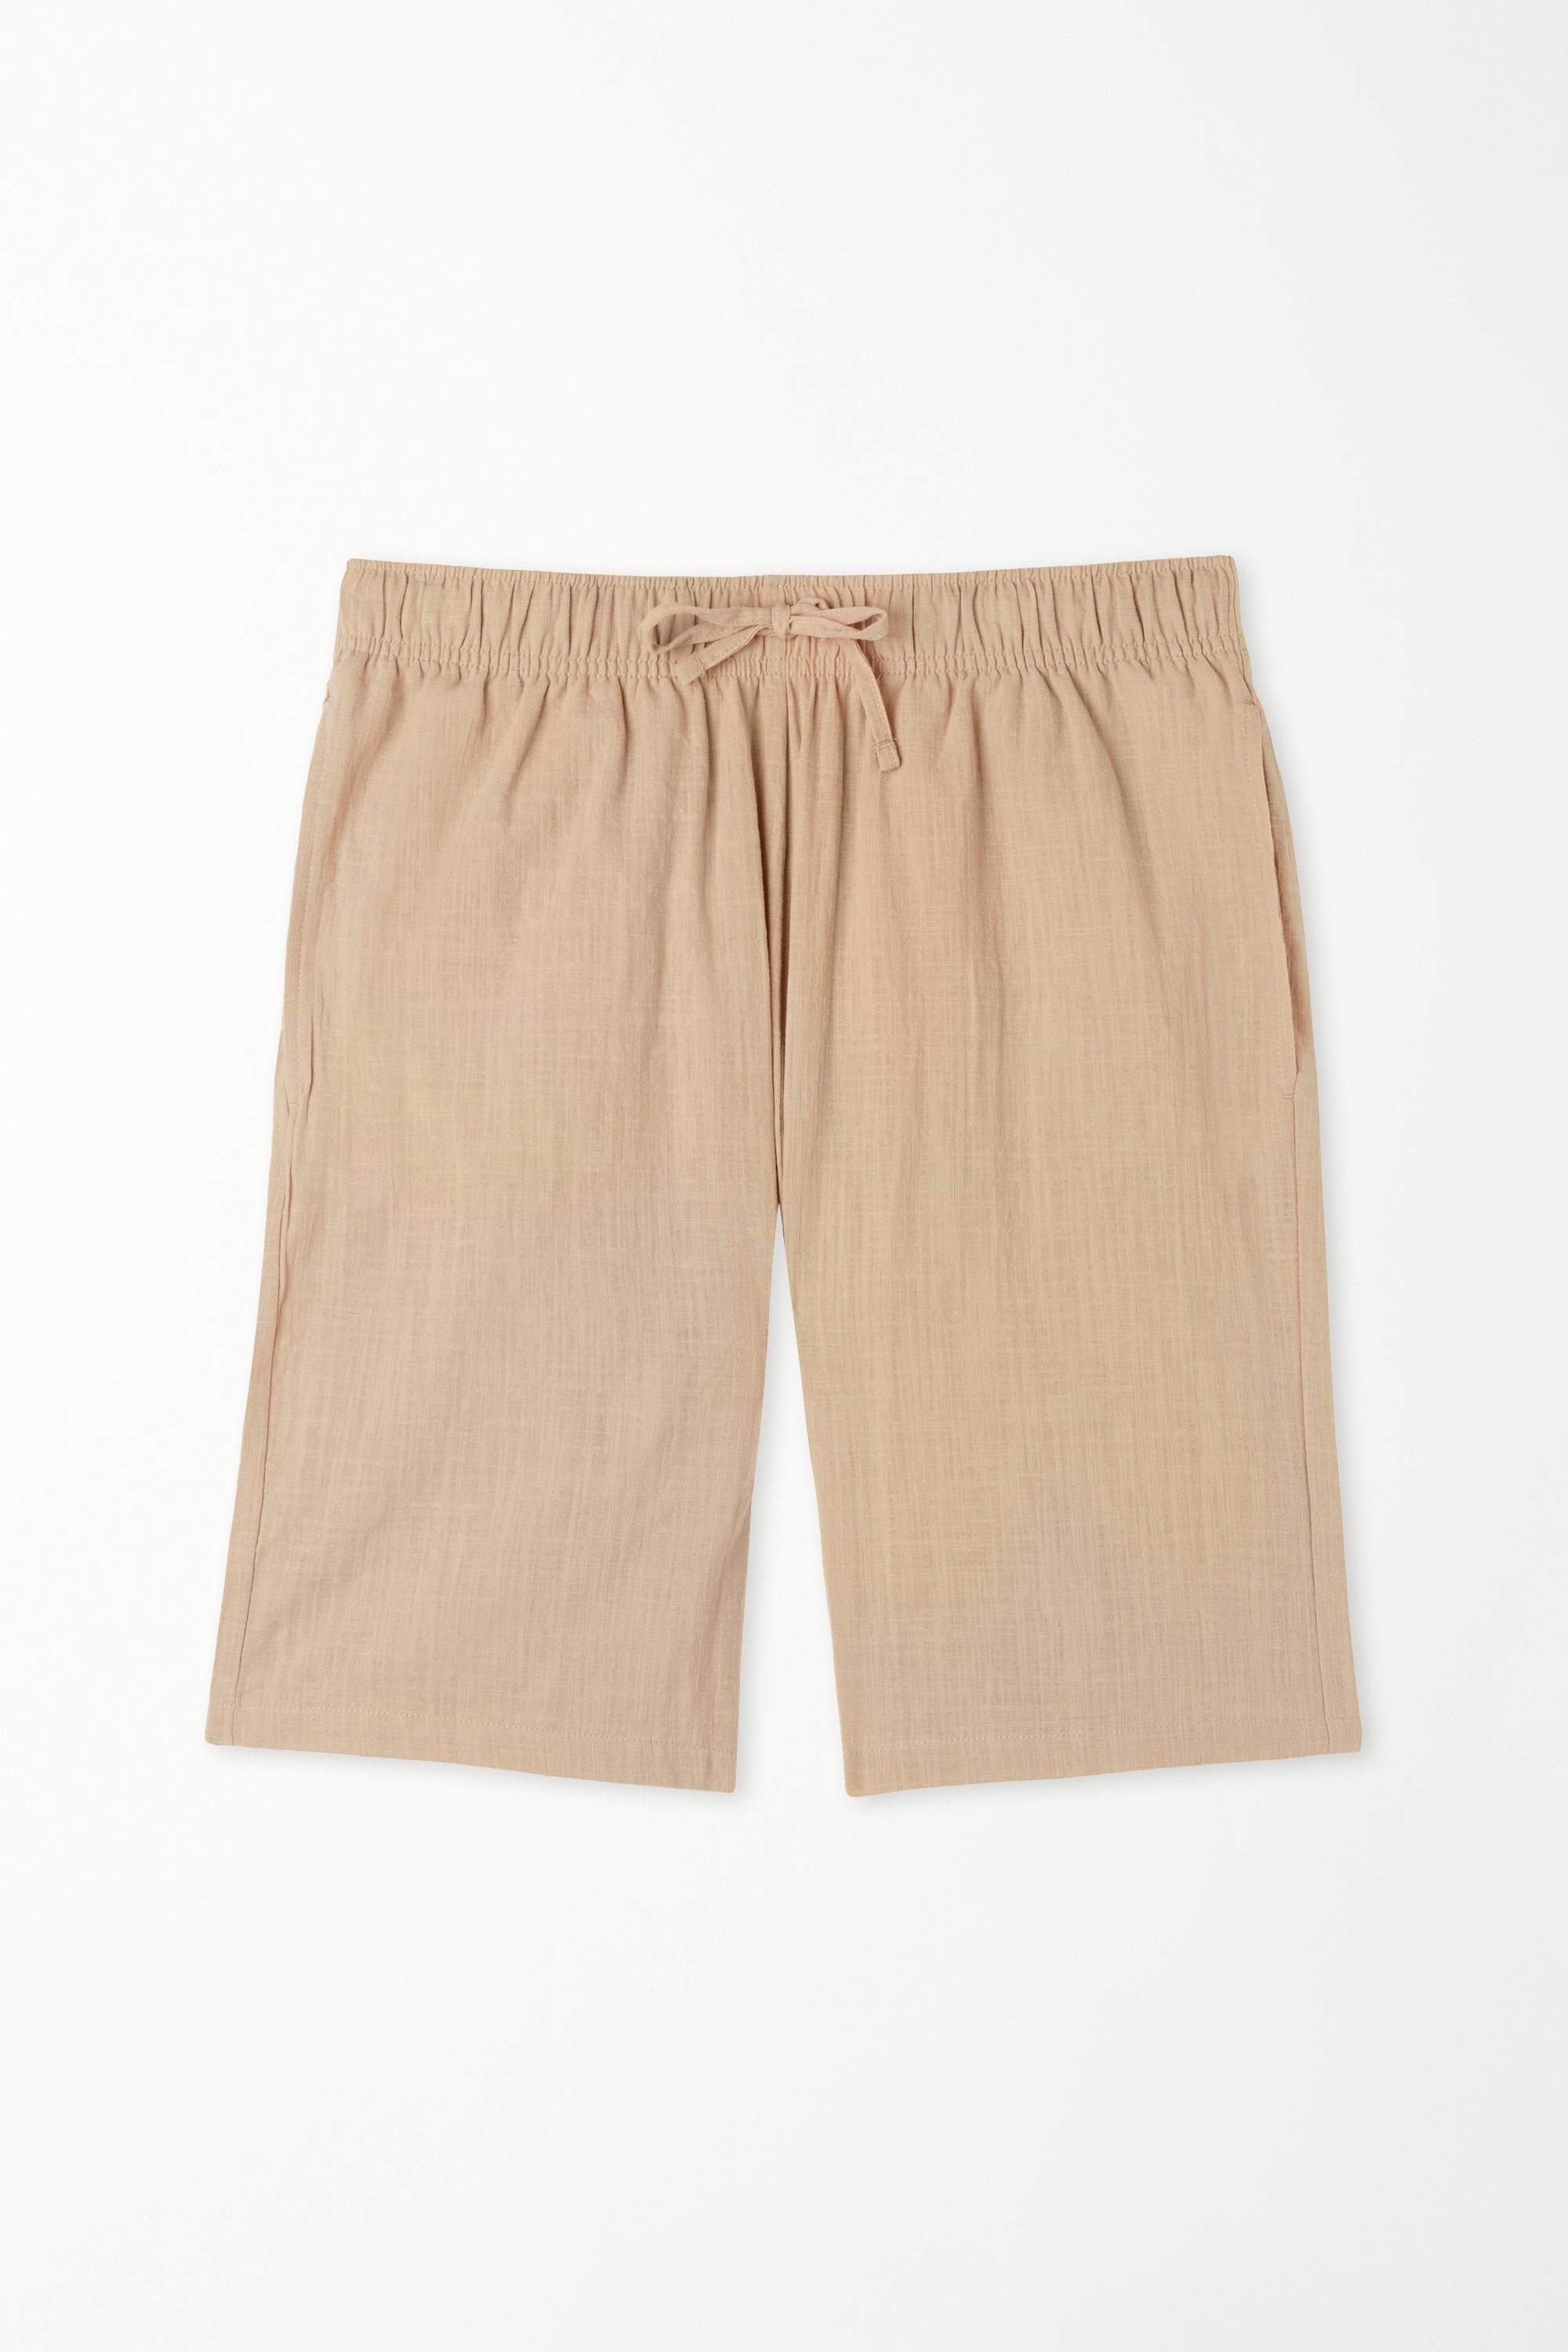 Pantaloni Scurți din Bumbac Super-Lejer 100% cu Buzunare